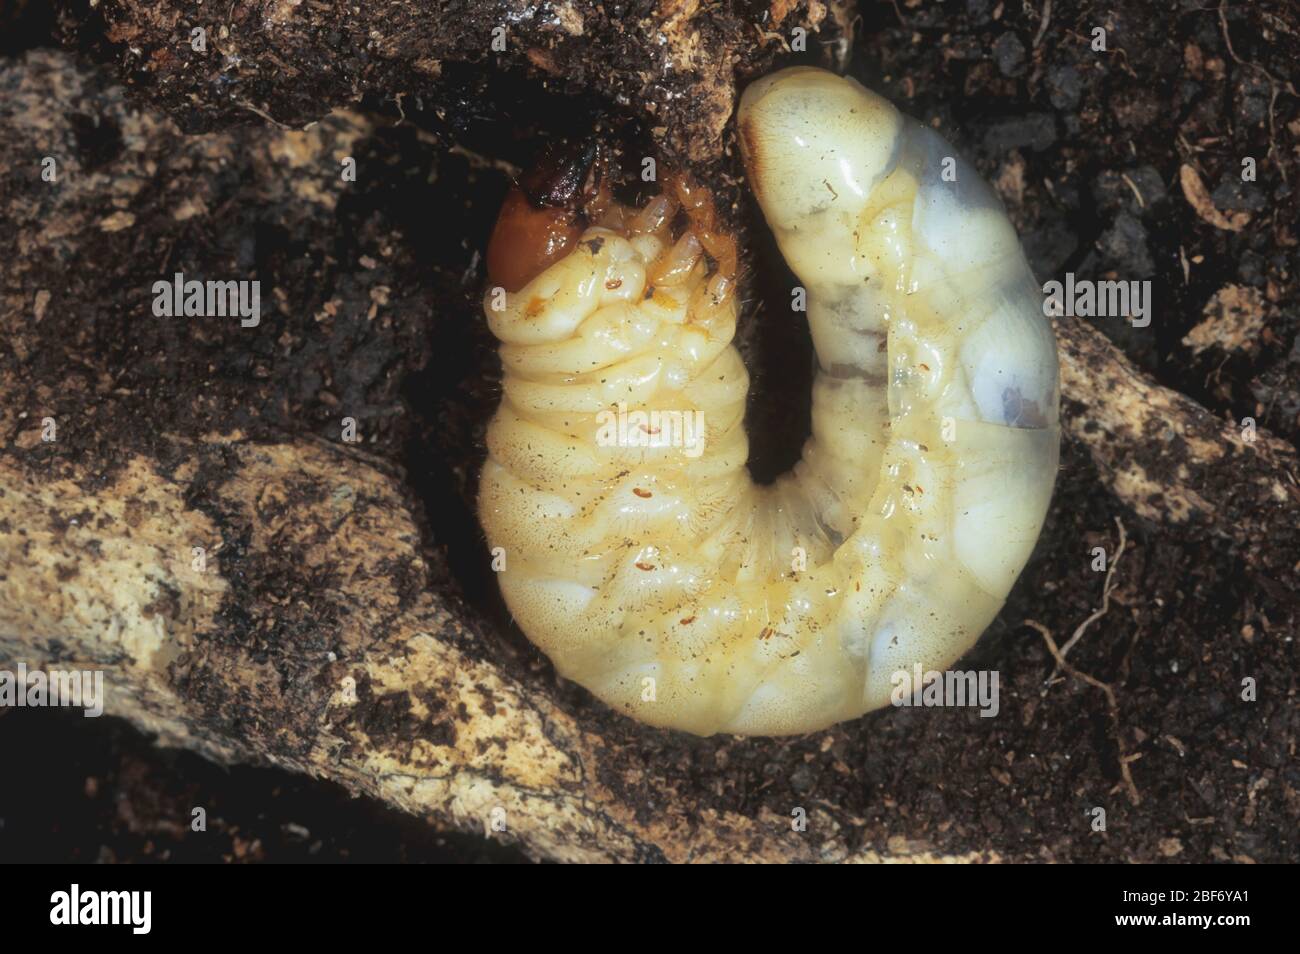 stag beetle, European stag beetle (Lucanus cervus), larva of a stag beetle, Germany Stock Photo